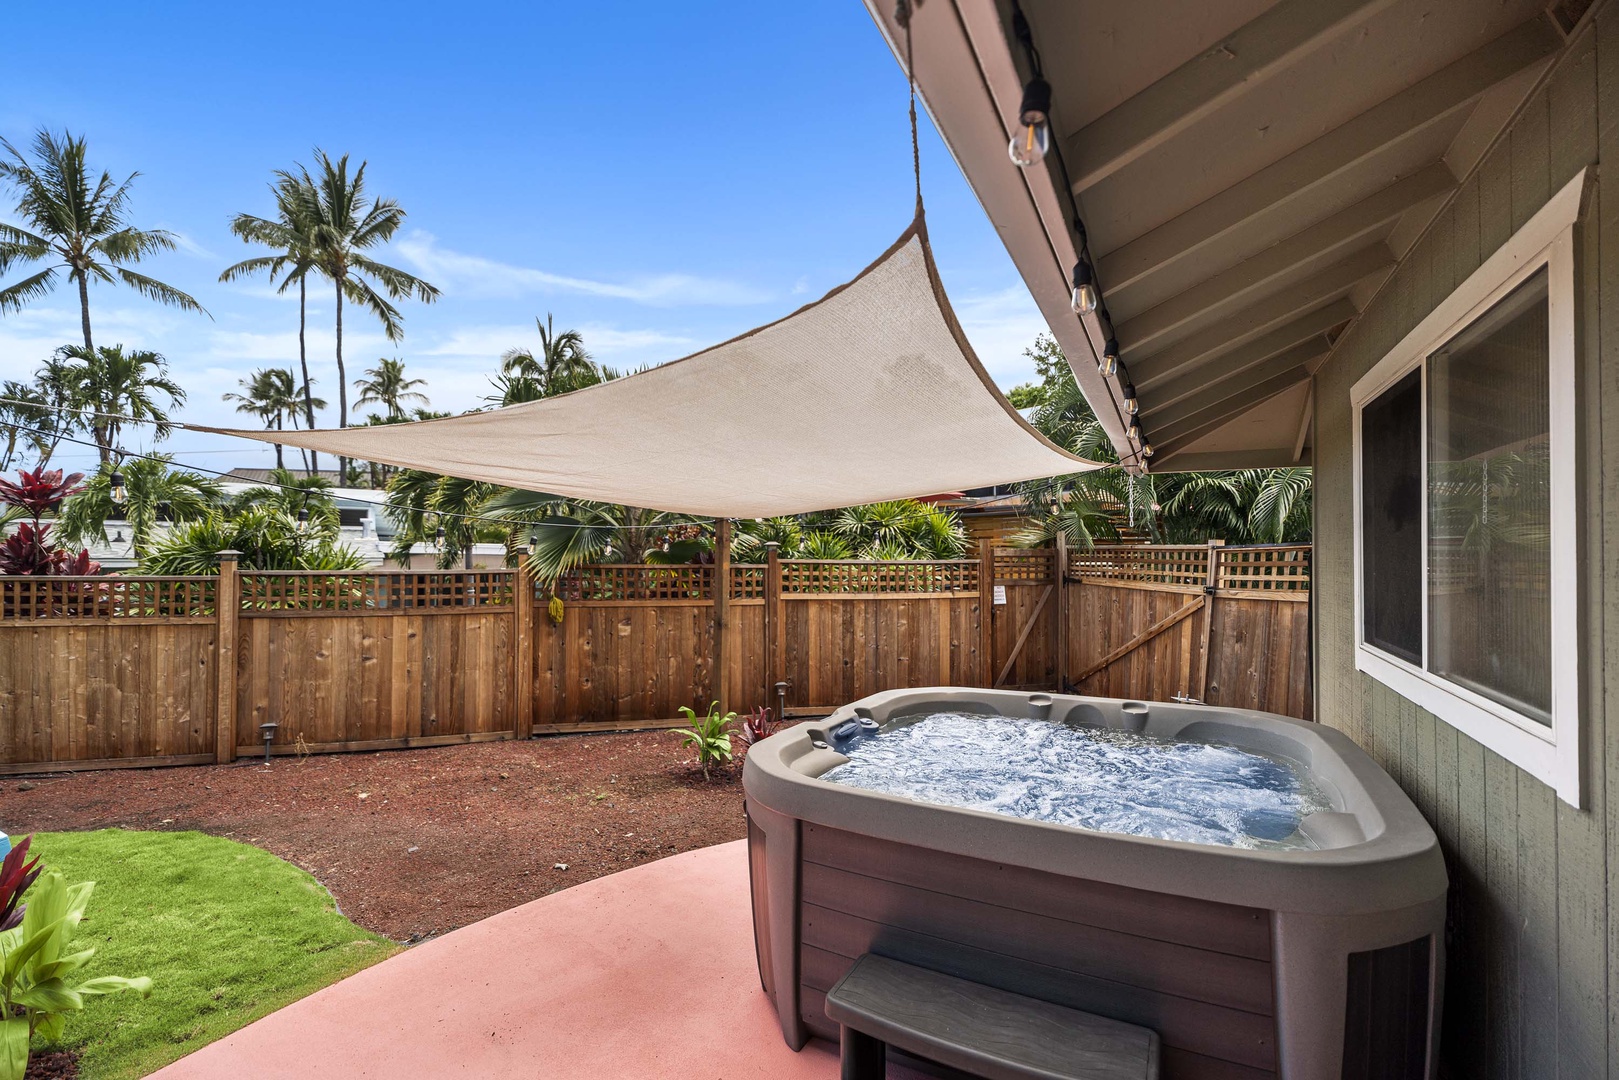 Kailua Kona Vacation Rentals, Hale A Kai - Private jacuzzi for your enjoyment